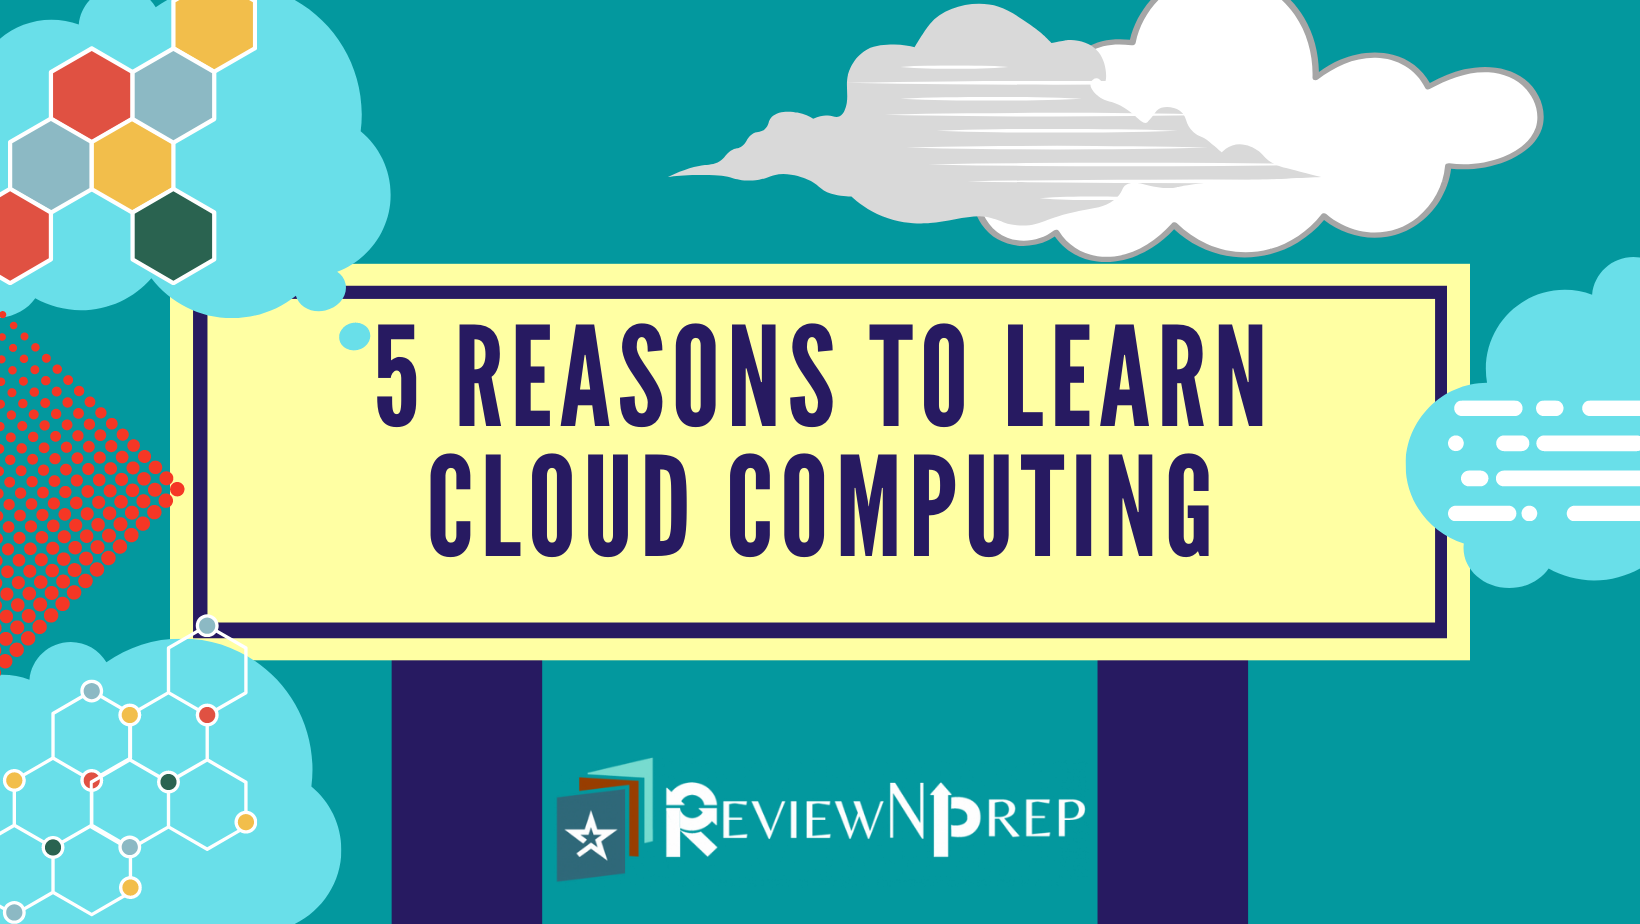 Reasons to learn cloud computing